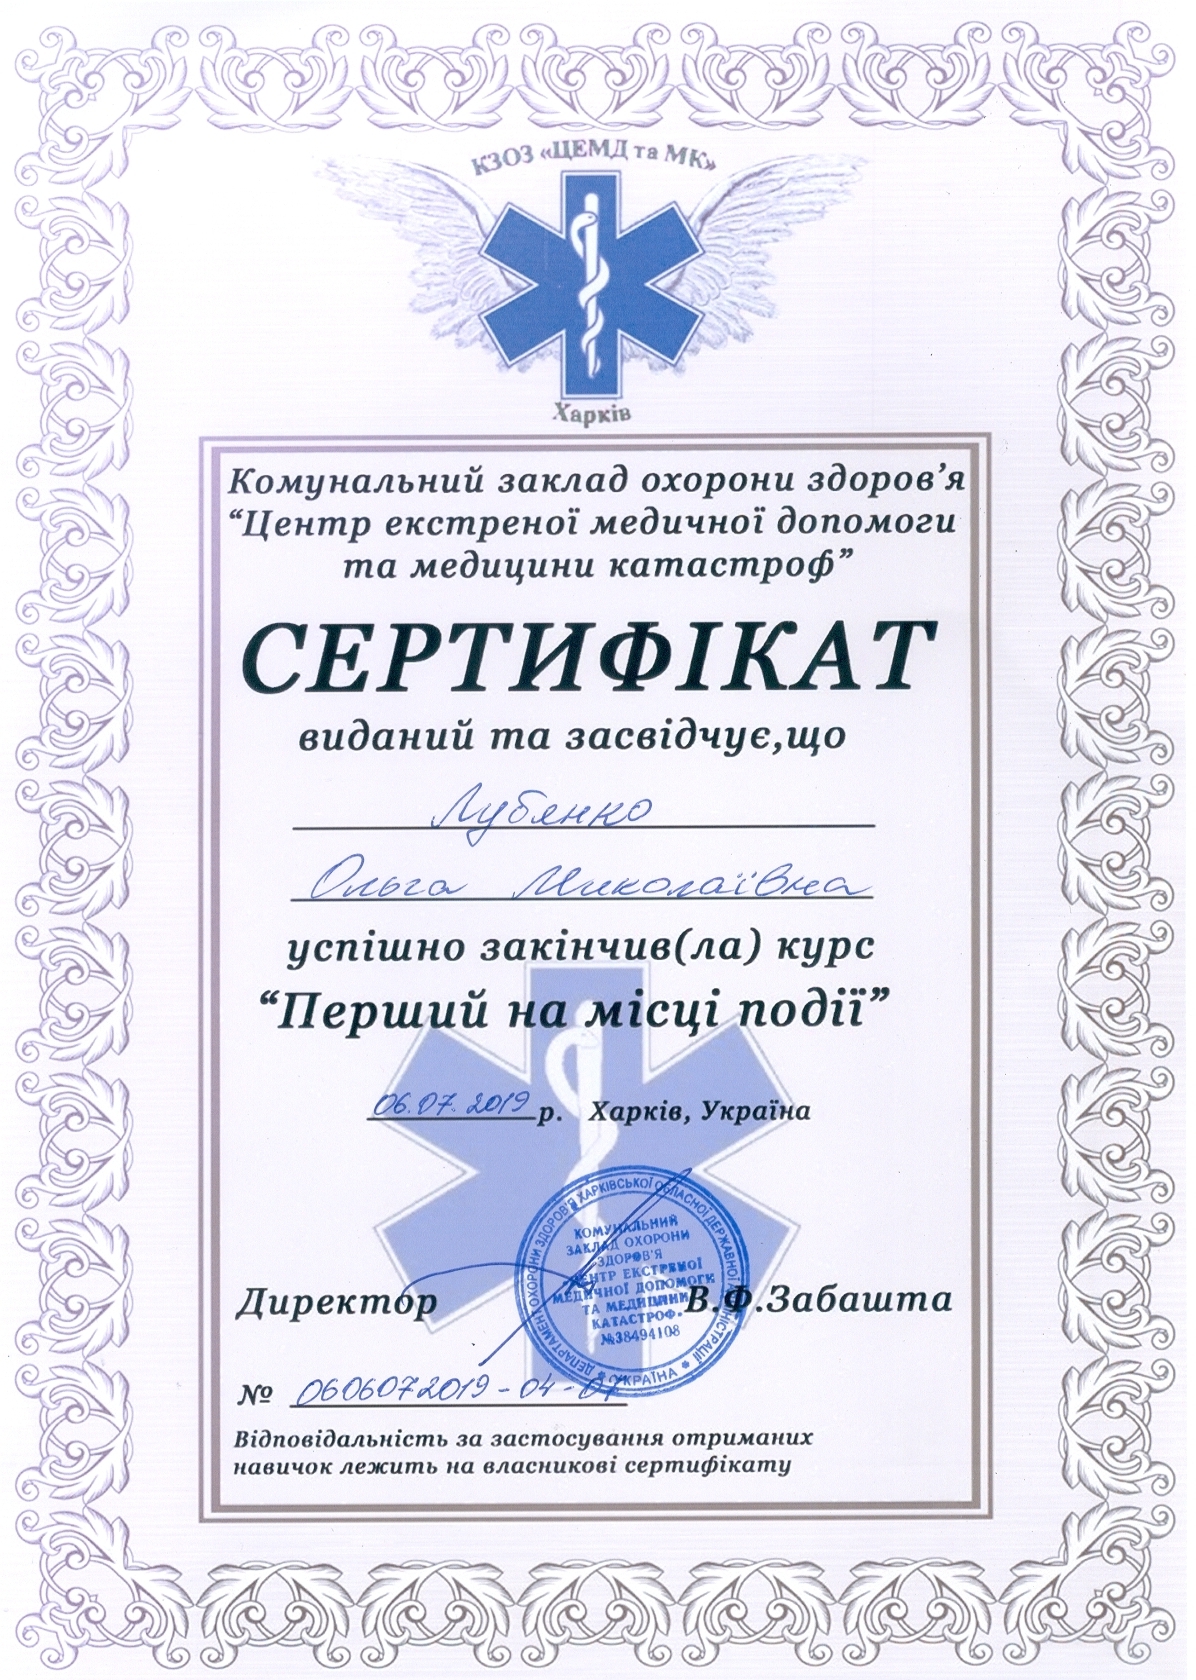 Сертификат №0606072019 04 07 Лубянко Ольга